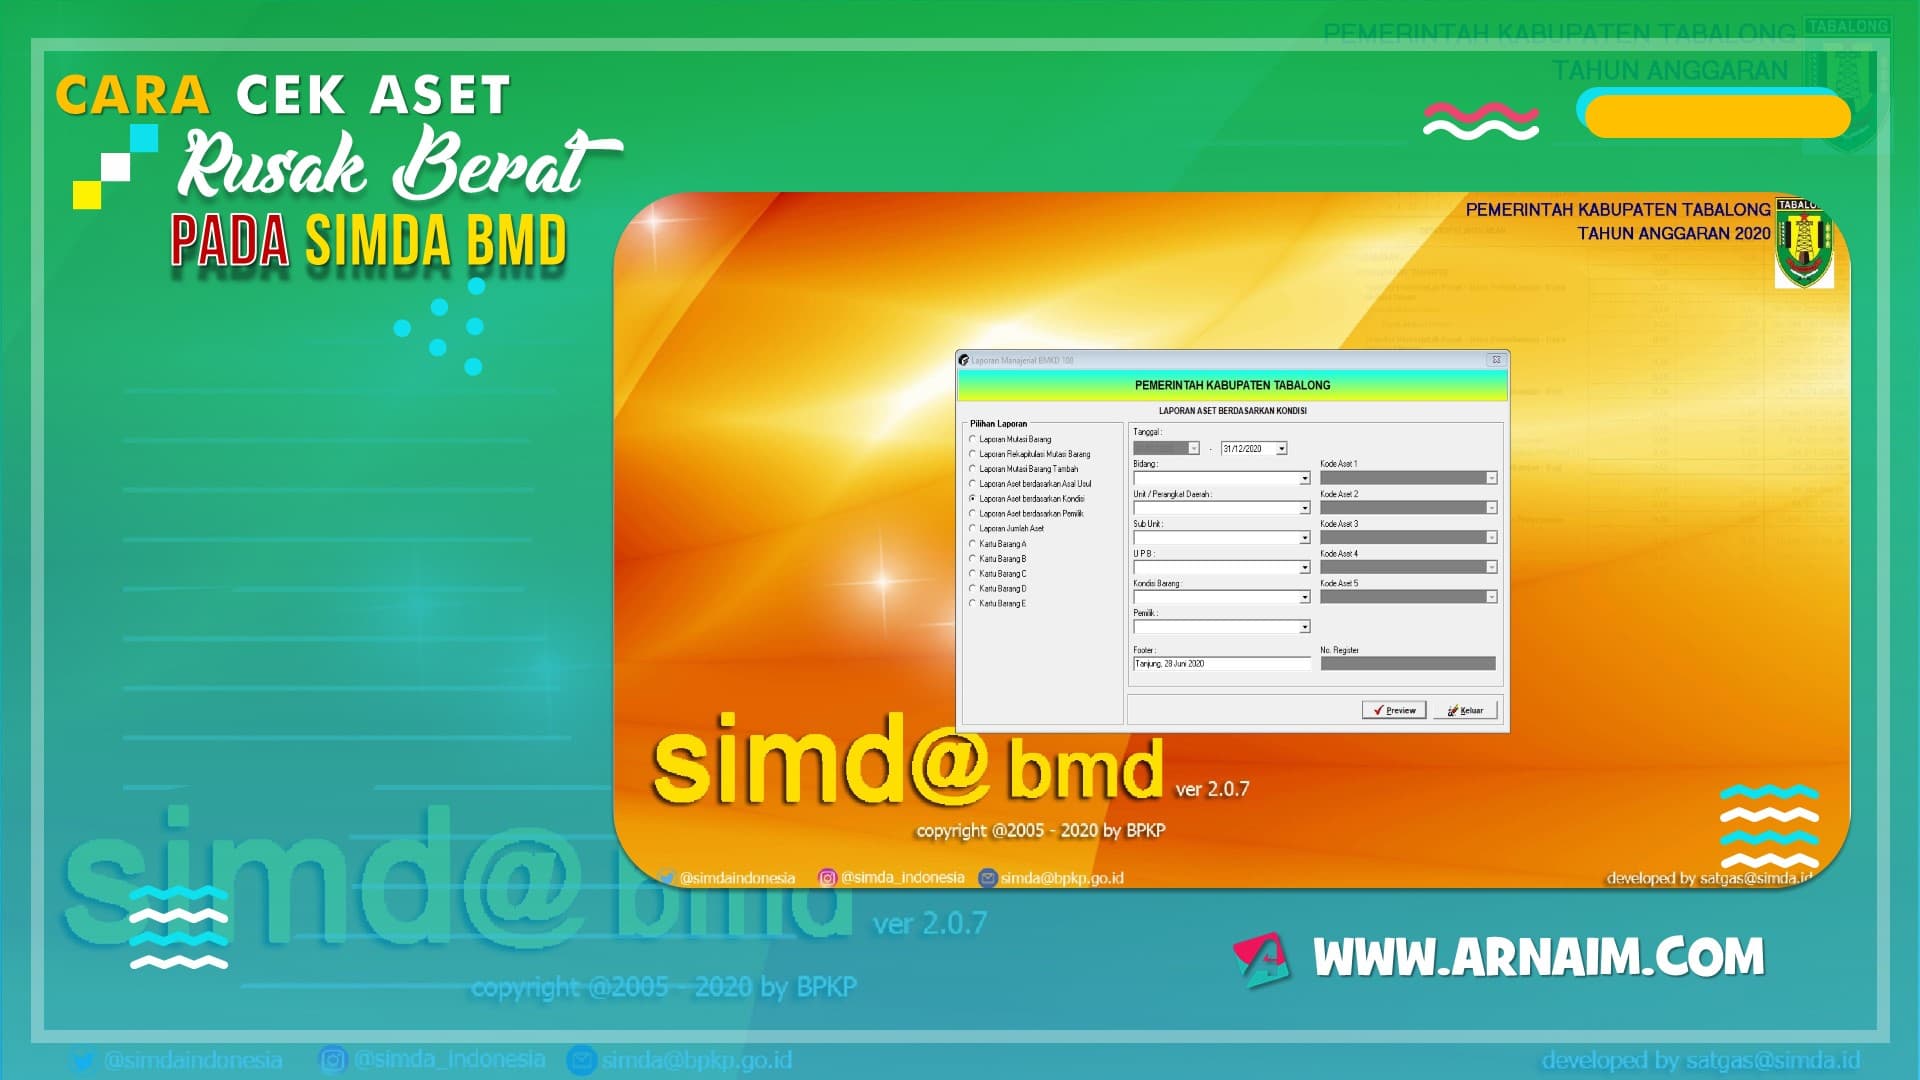 Download aplikasi simda offline